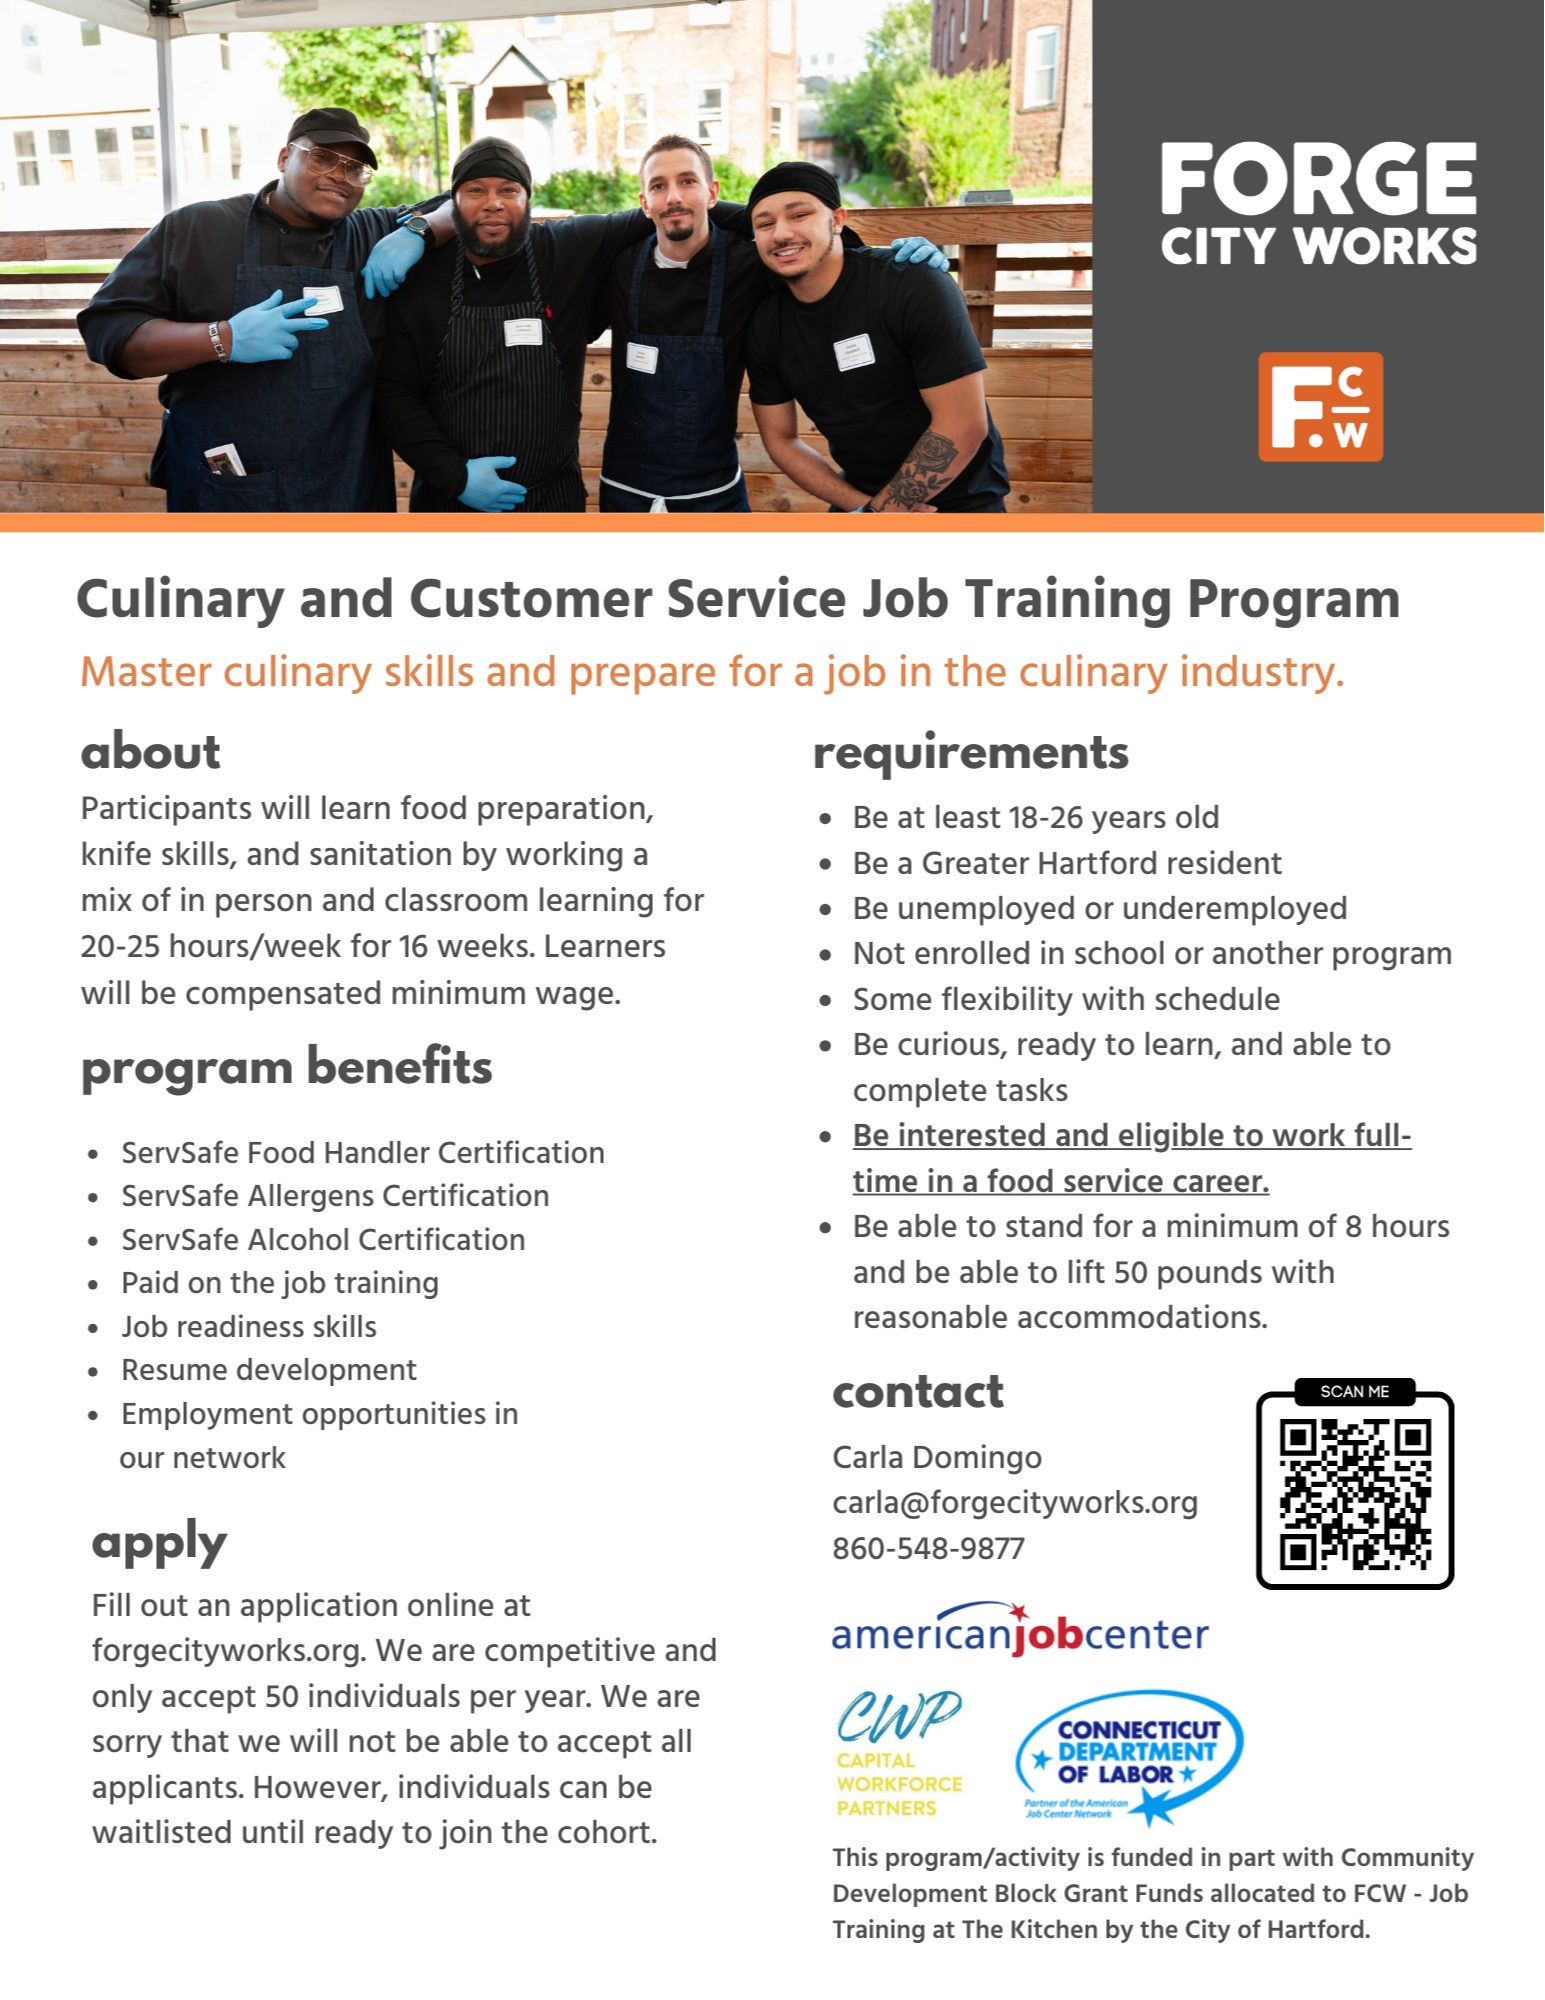 Forge City Work Training Program flyer